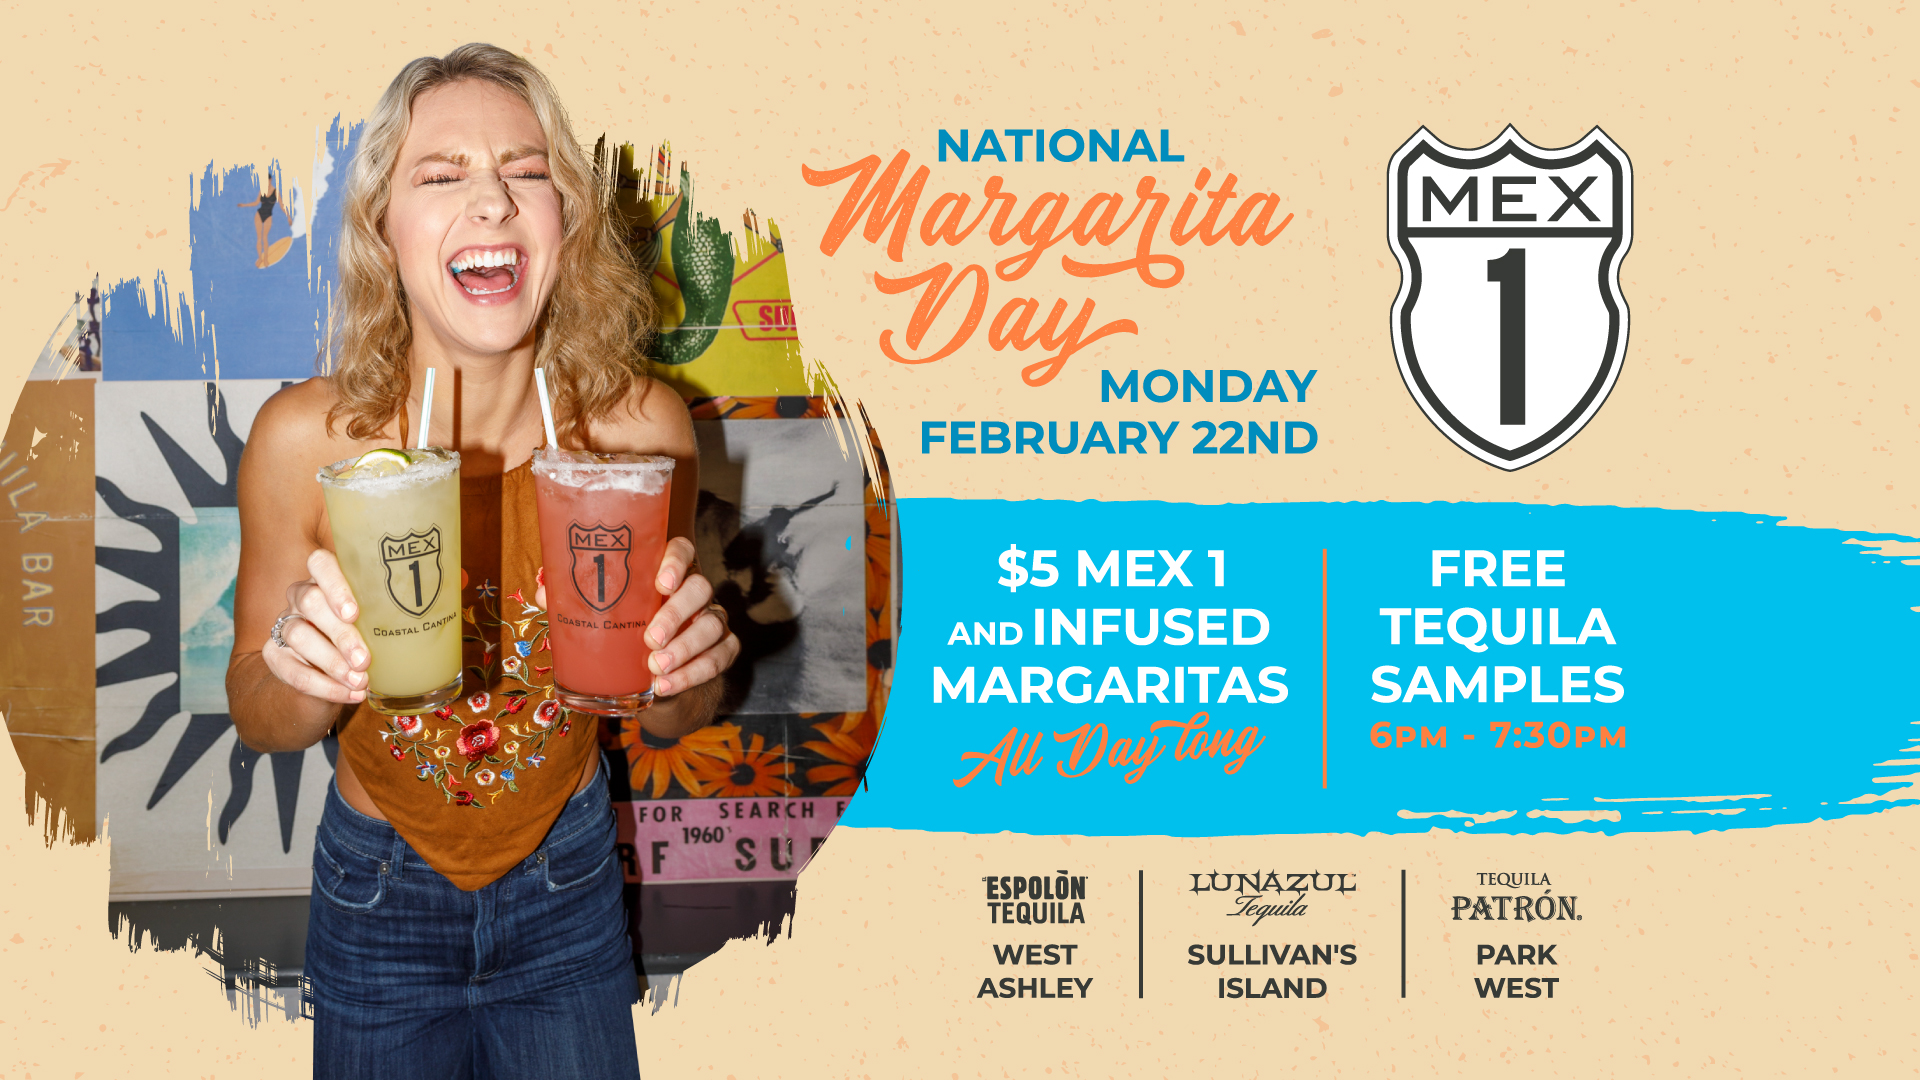 National Margarita Day at Mex 1 Coastal Cantina on Monday, February 22nd